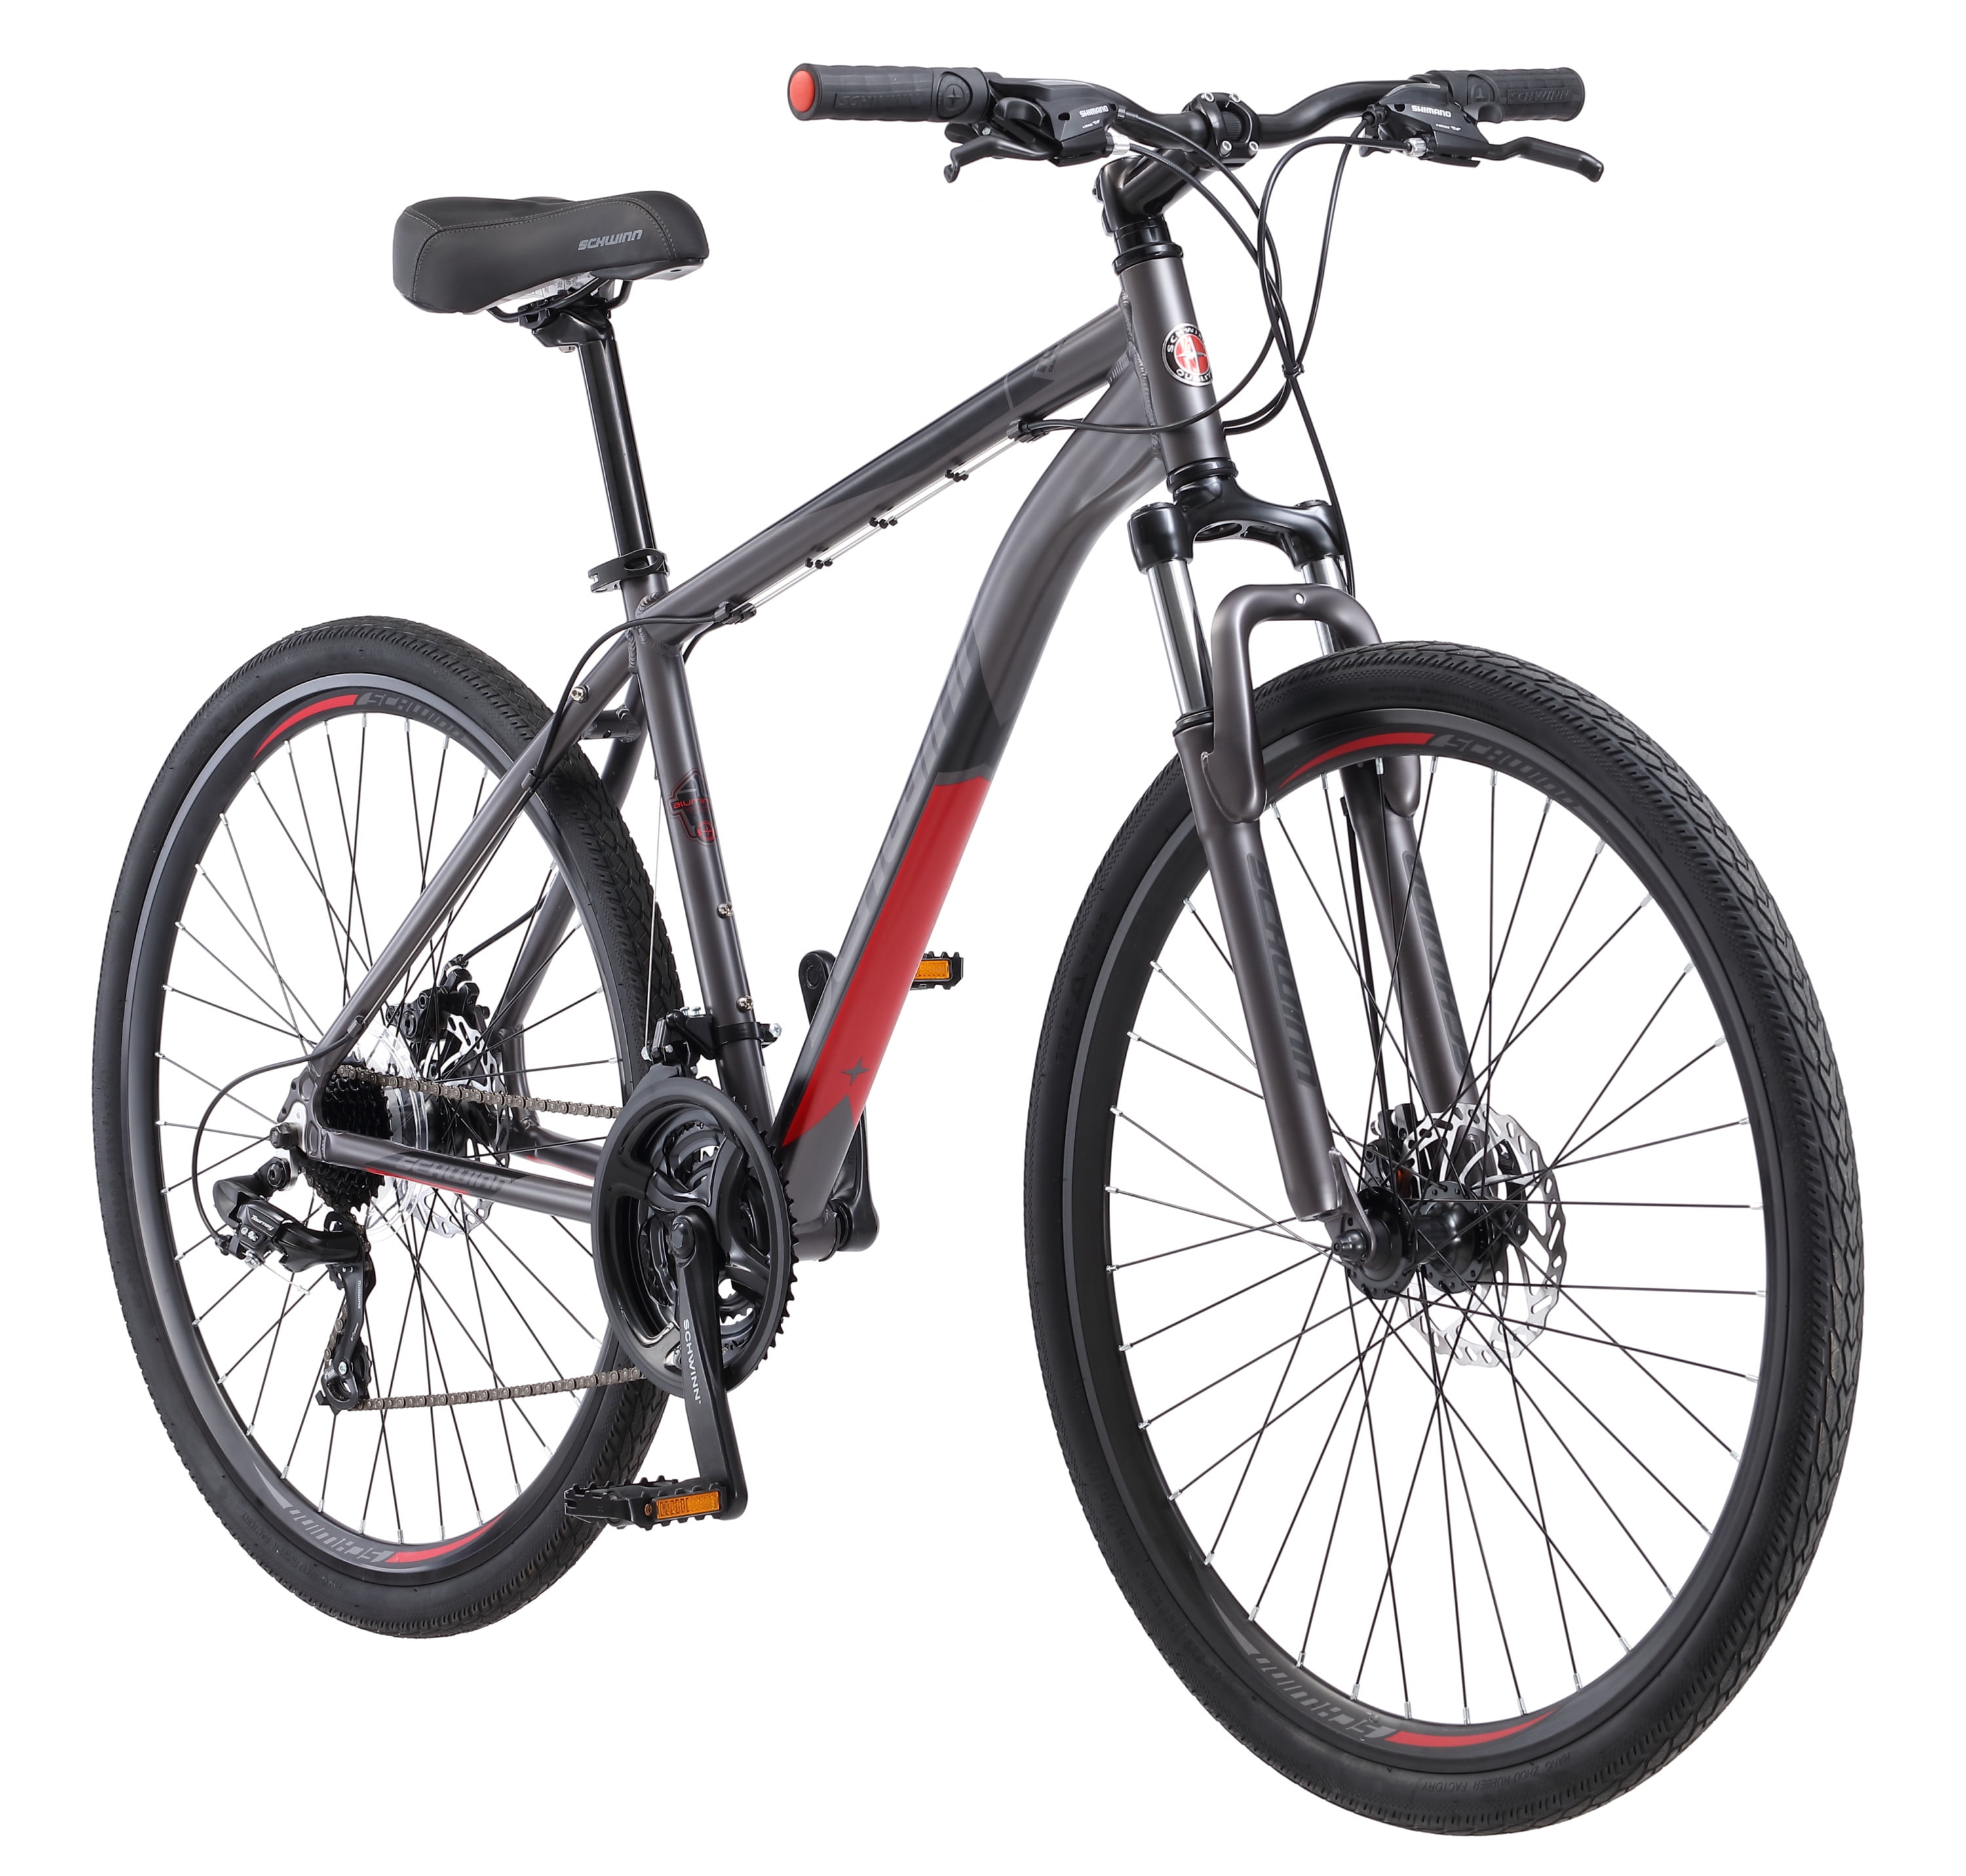 FREE SHIPPING Details about   Hyper 700c Men's SpinFit Hybrid Bike Black/Red 